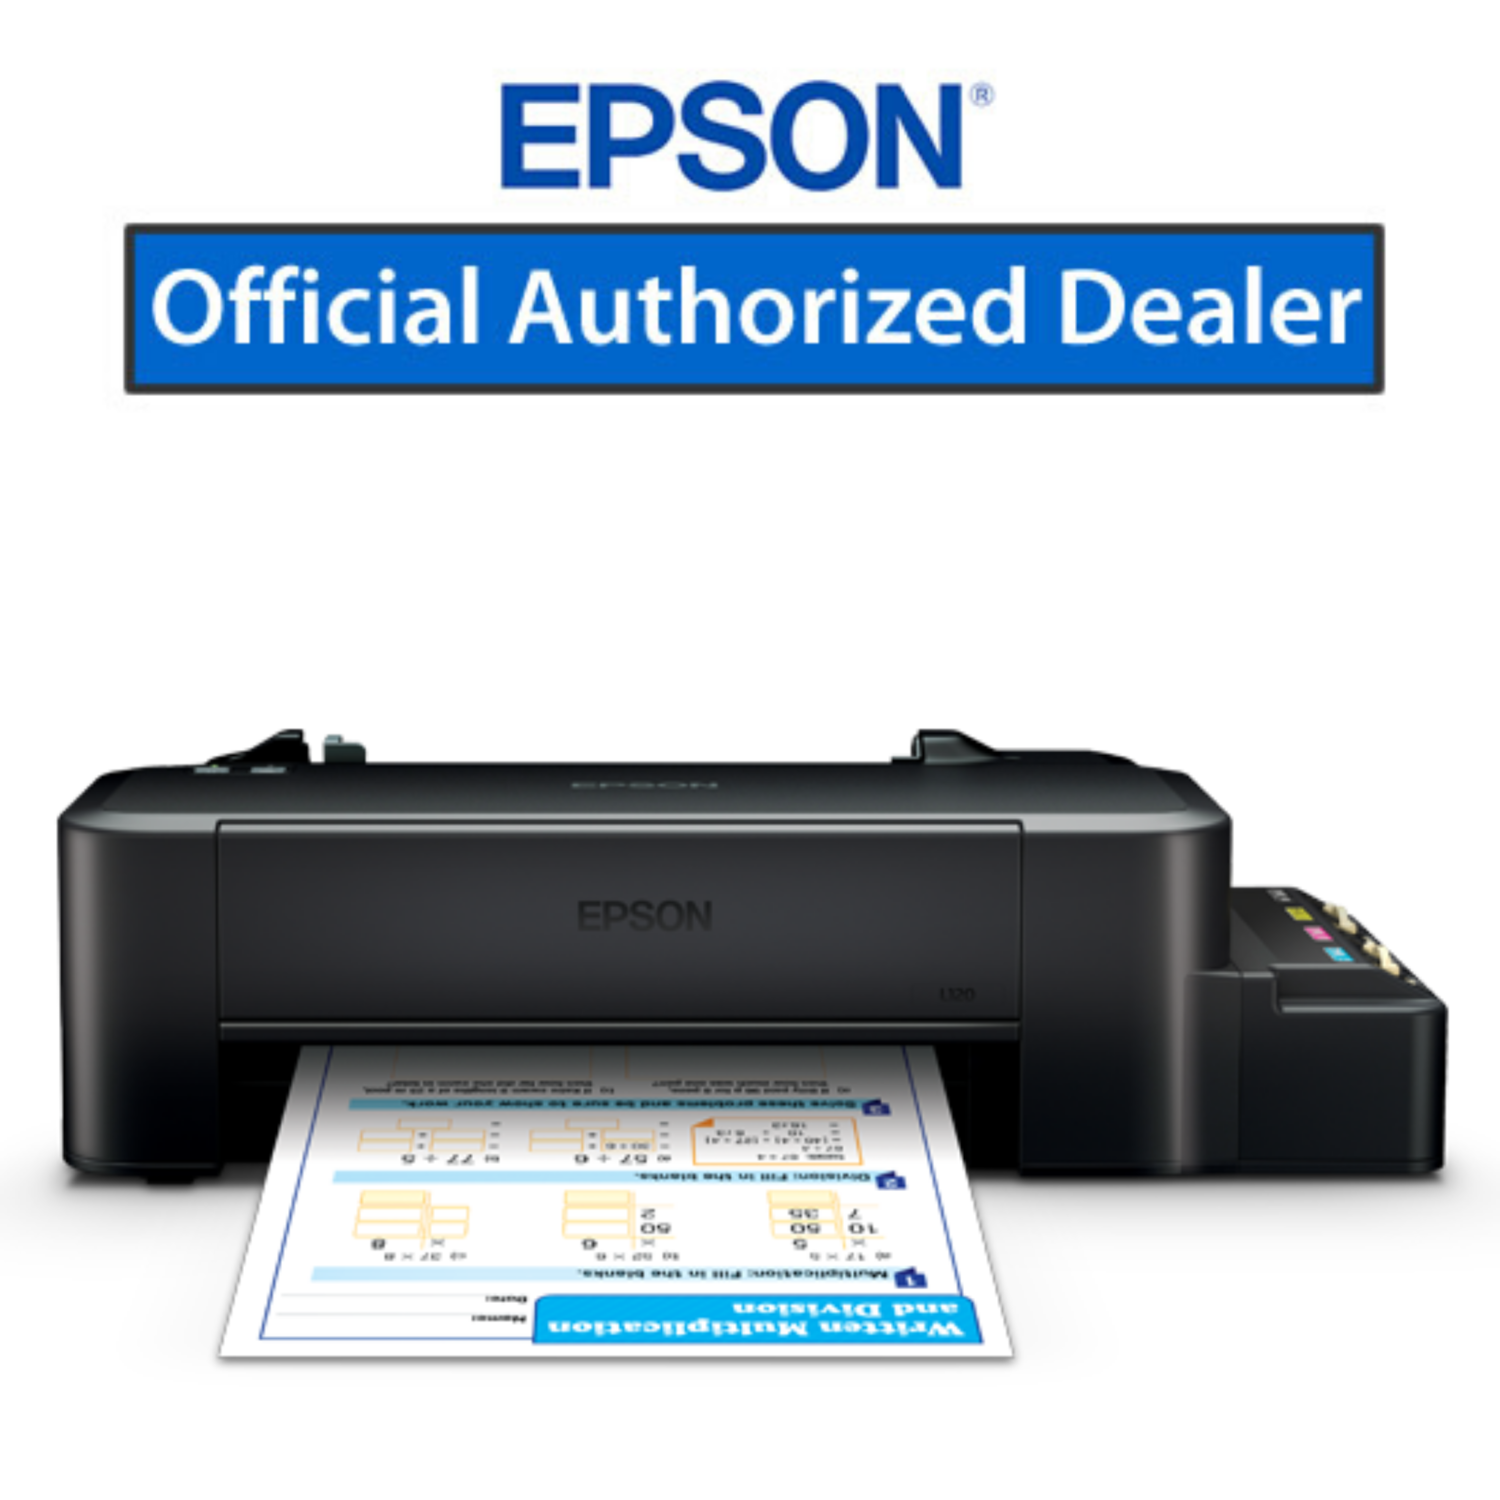 Epson WorkForce Wi-Fi Multi-Function Inkjet Printer - copierpc